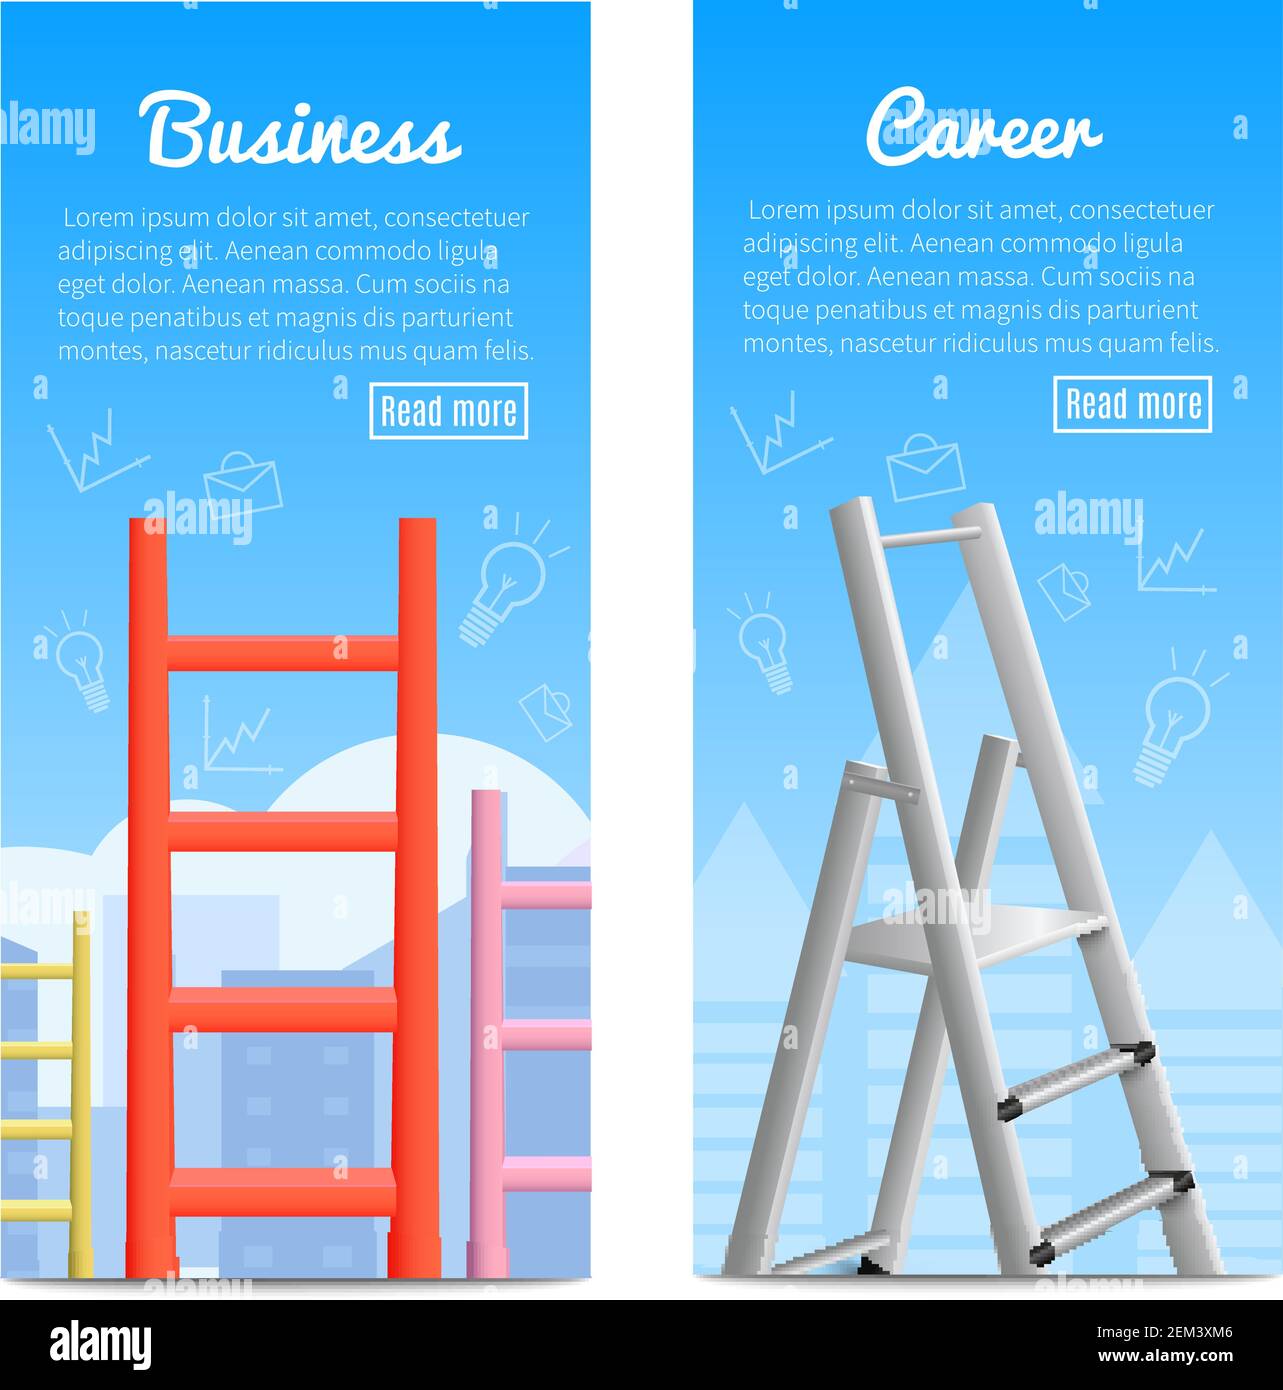 Karriere Leiter Business Job Förderung Metapher 2 realistisch vertikal  informativ Banner Web-Seite Design isoliert Vektor Illustration  Stock-Vektorgrafik - Alamy